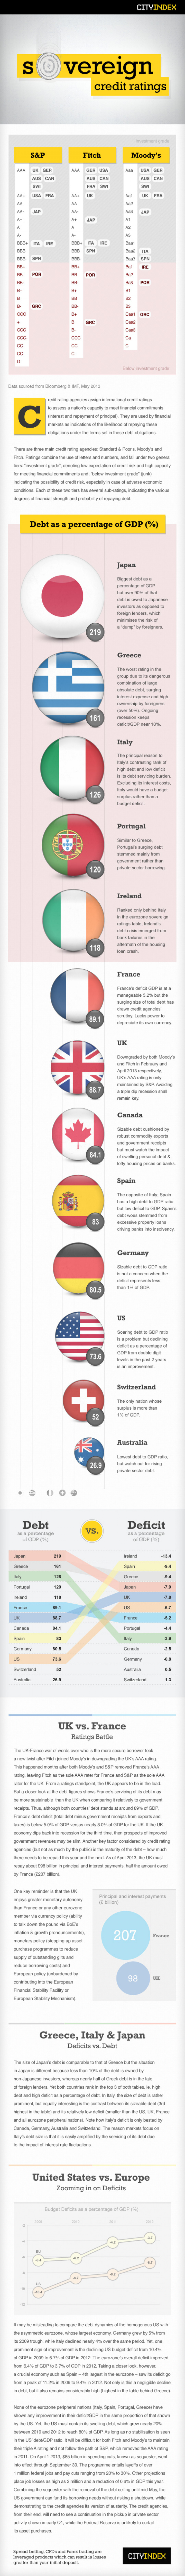 sovereign debt [crisis?] Infographic